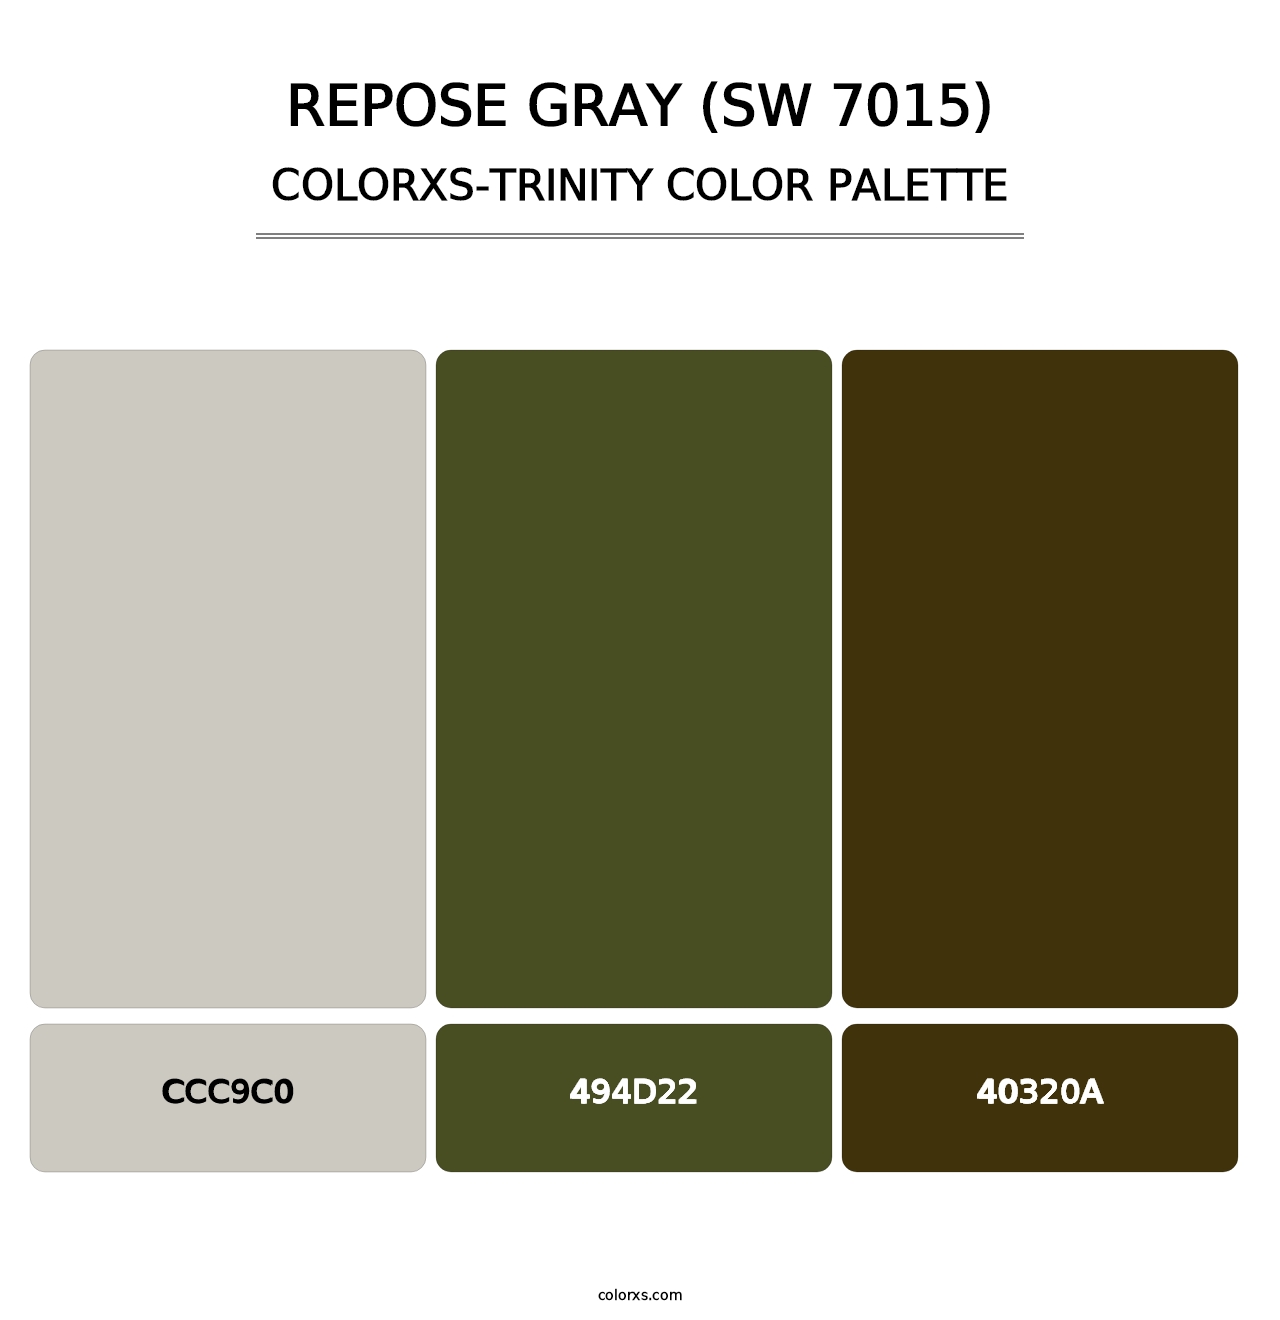 Repose Gray (SW 7015) - Colorxs Trinity Palette